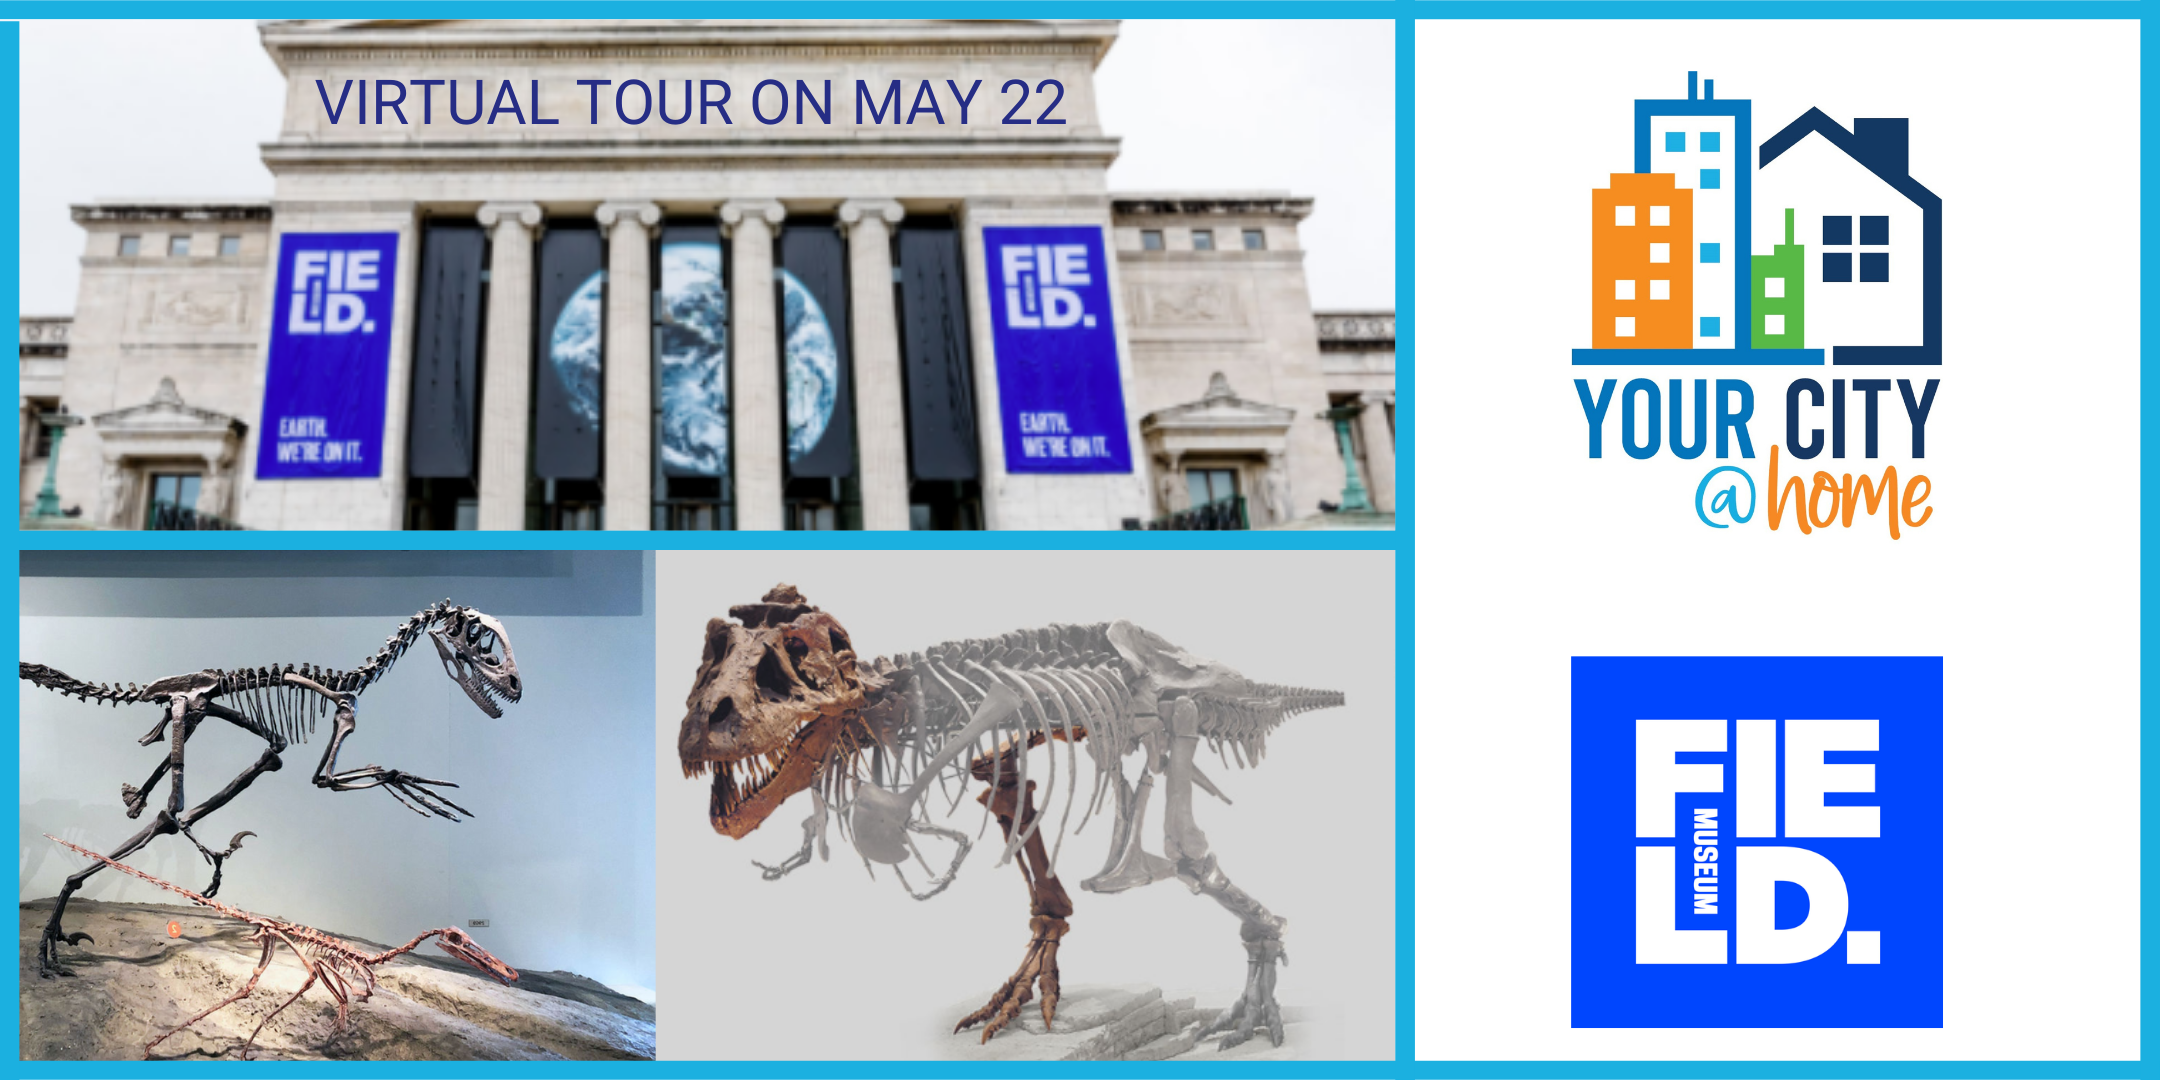 Your City @Home Virtual Tour Field Museum Dinosaur Exhibit image